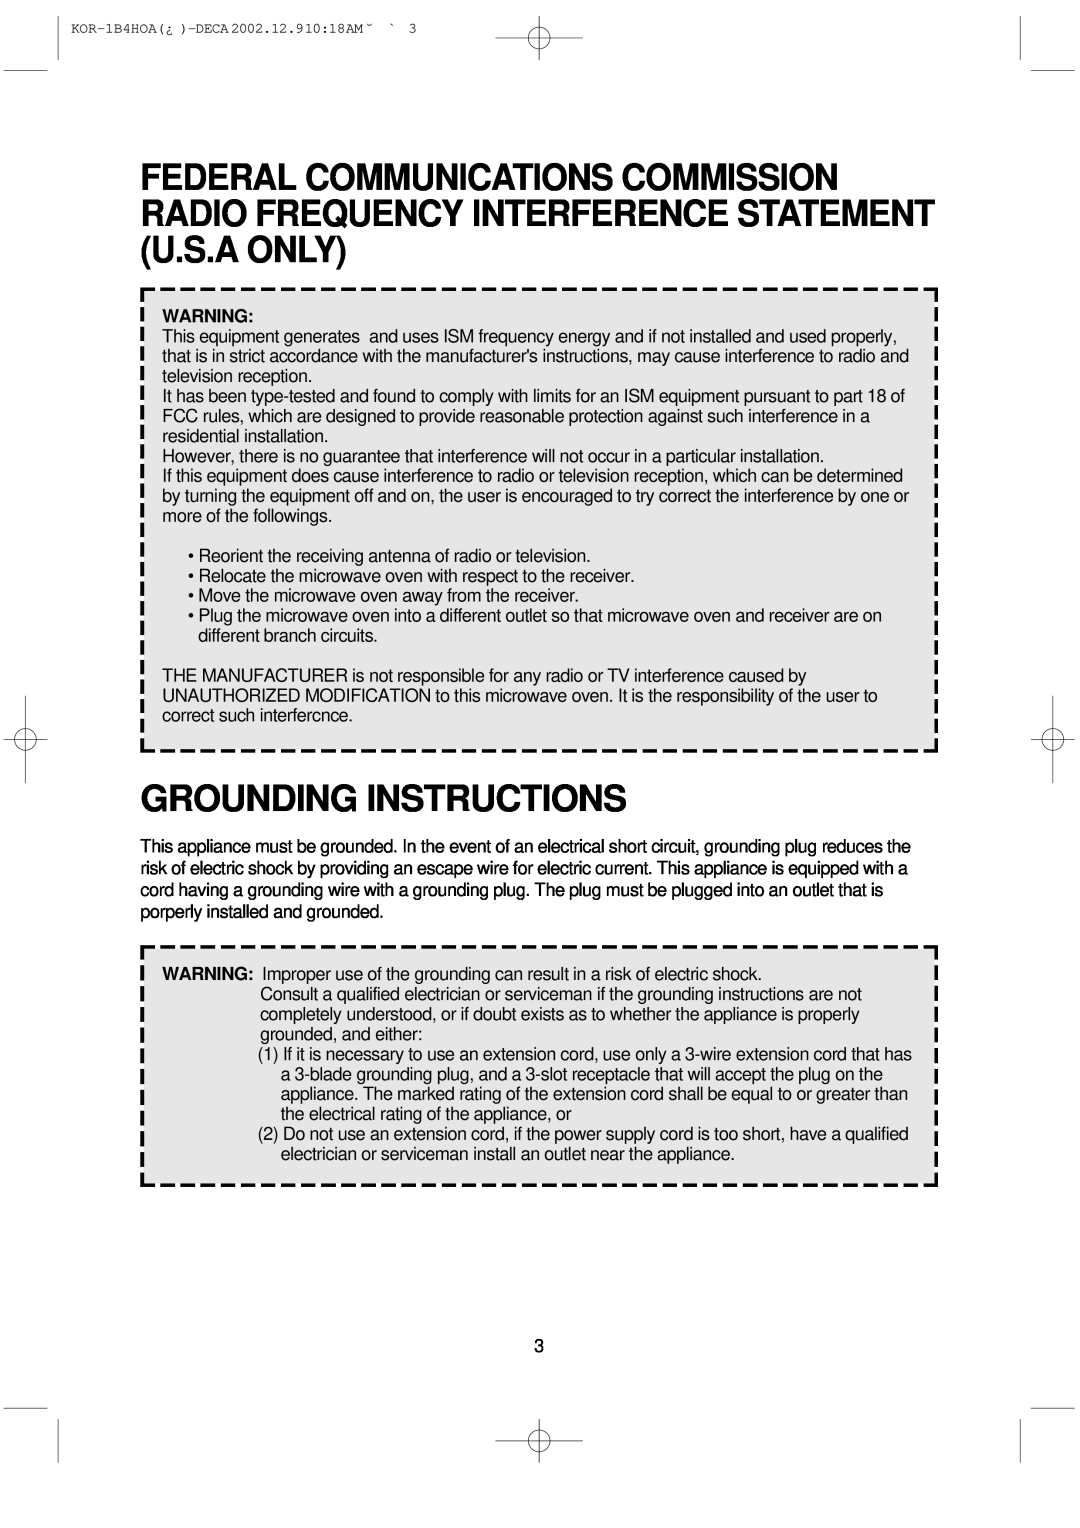 Daewoo KOR-1B4H manual Grounding Instructions 